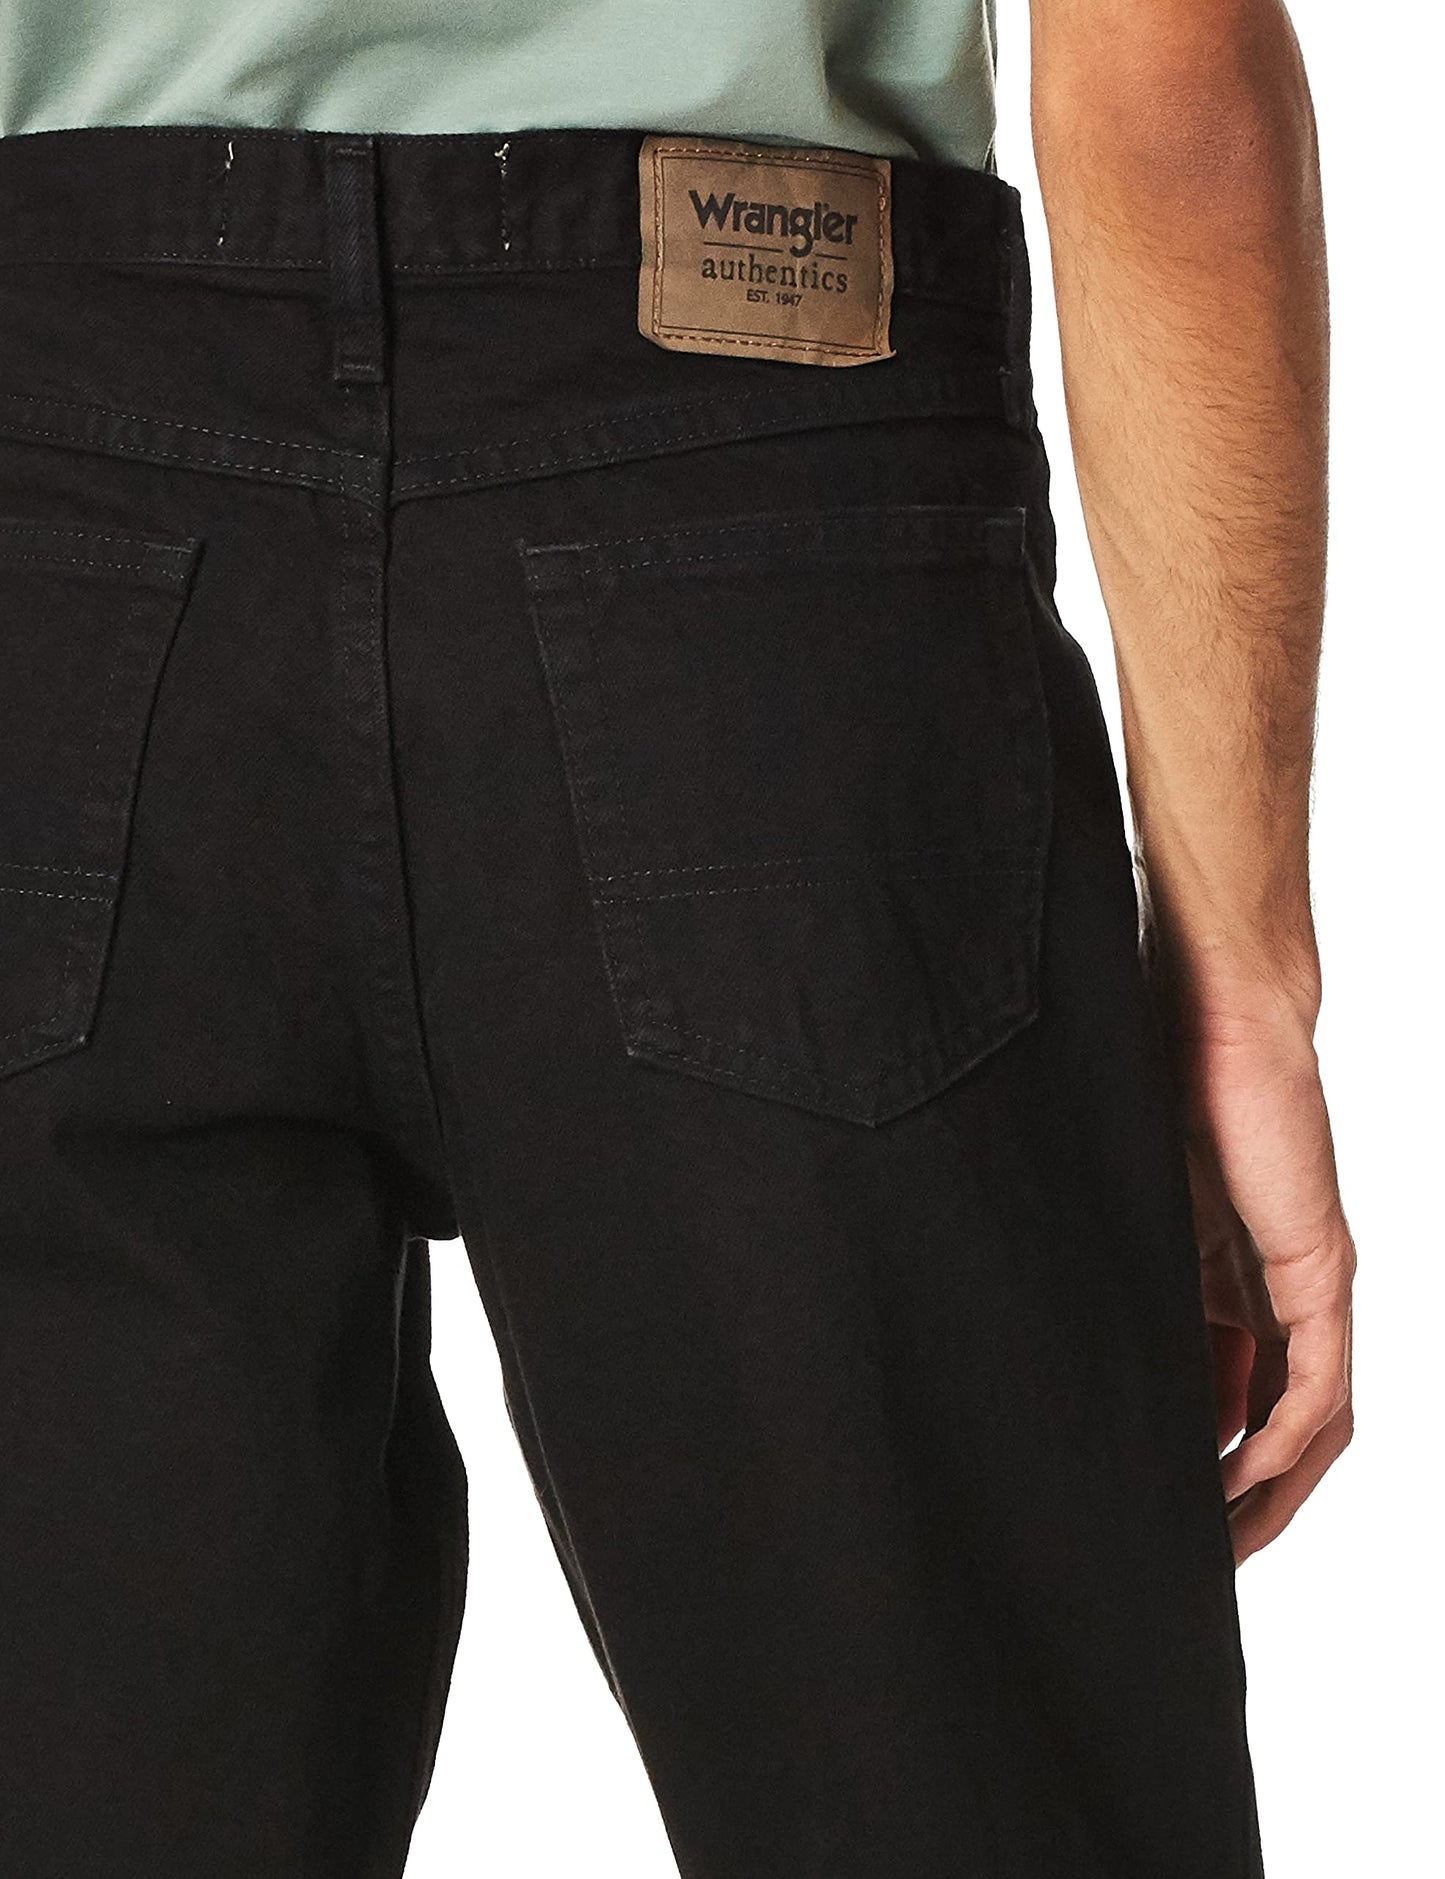 Wrangler Authentics Men's Big & Tall Classic 5-Pocket Relaxed Fit Cotton Jean, Black, 44W x 32L